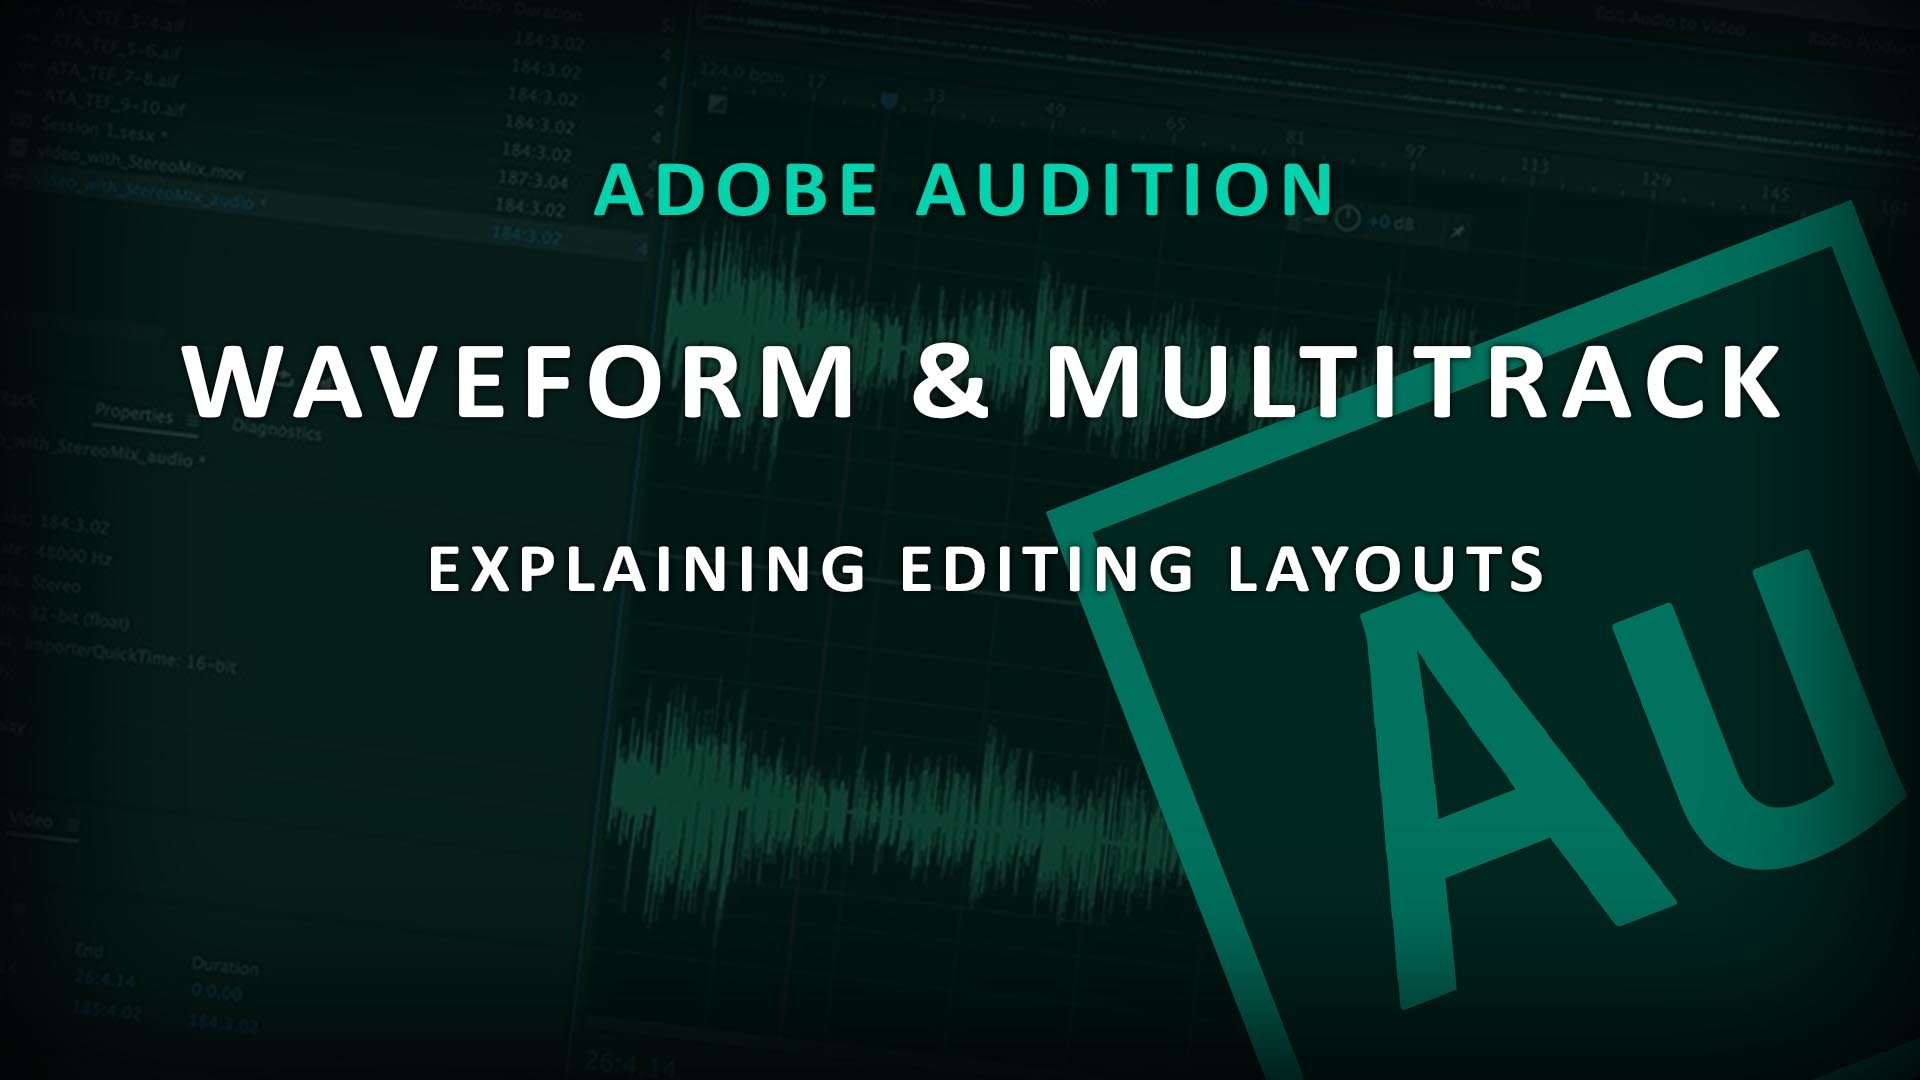 Adobe Audition - (2) Waveform & Multi-track layouts - The University of  Sheffield Kaltura Digital Media Hub